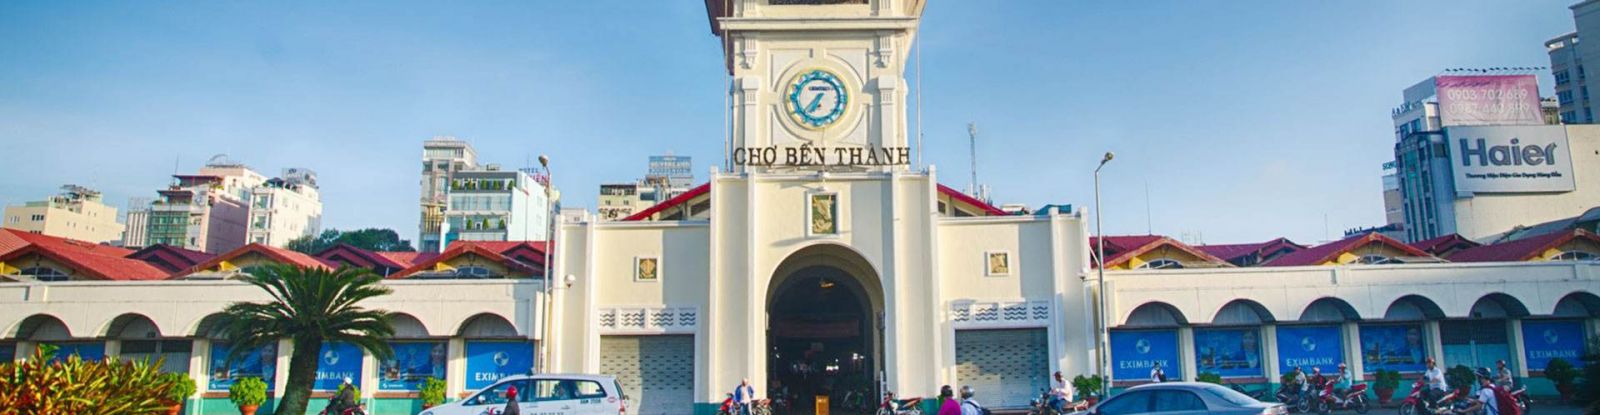 Destinations in Ho Chi Minh City